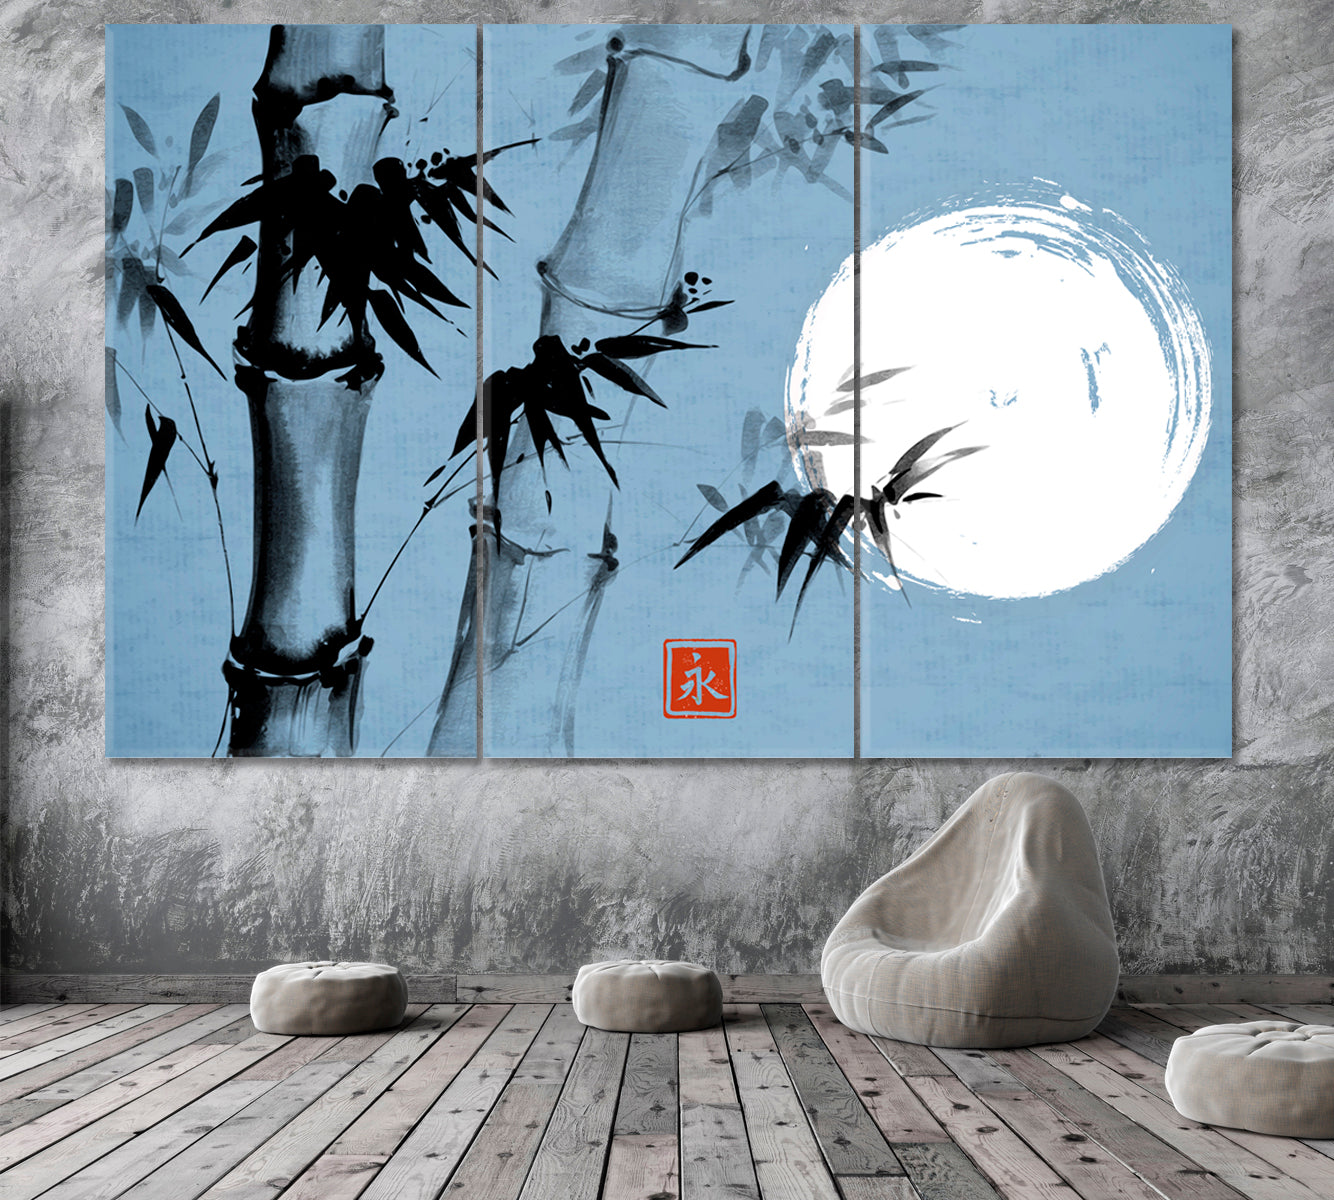 Japan Traditional Sumi-e Painting Wall Mural